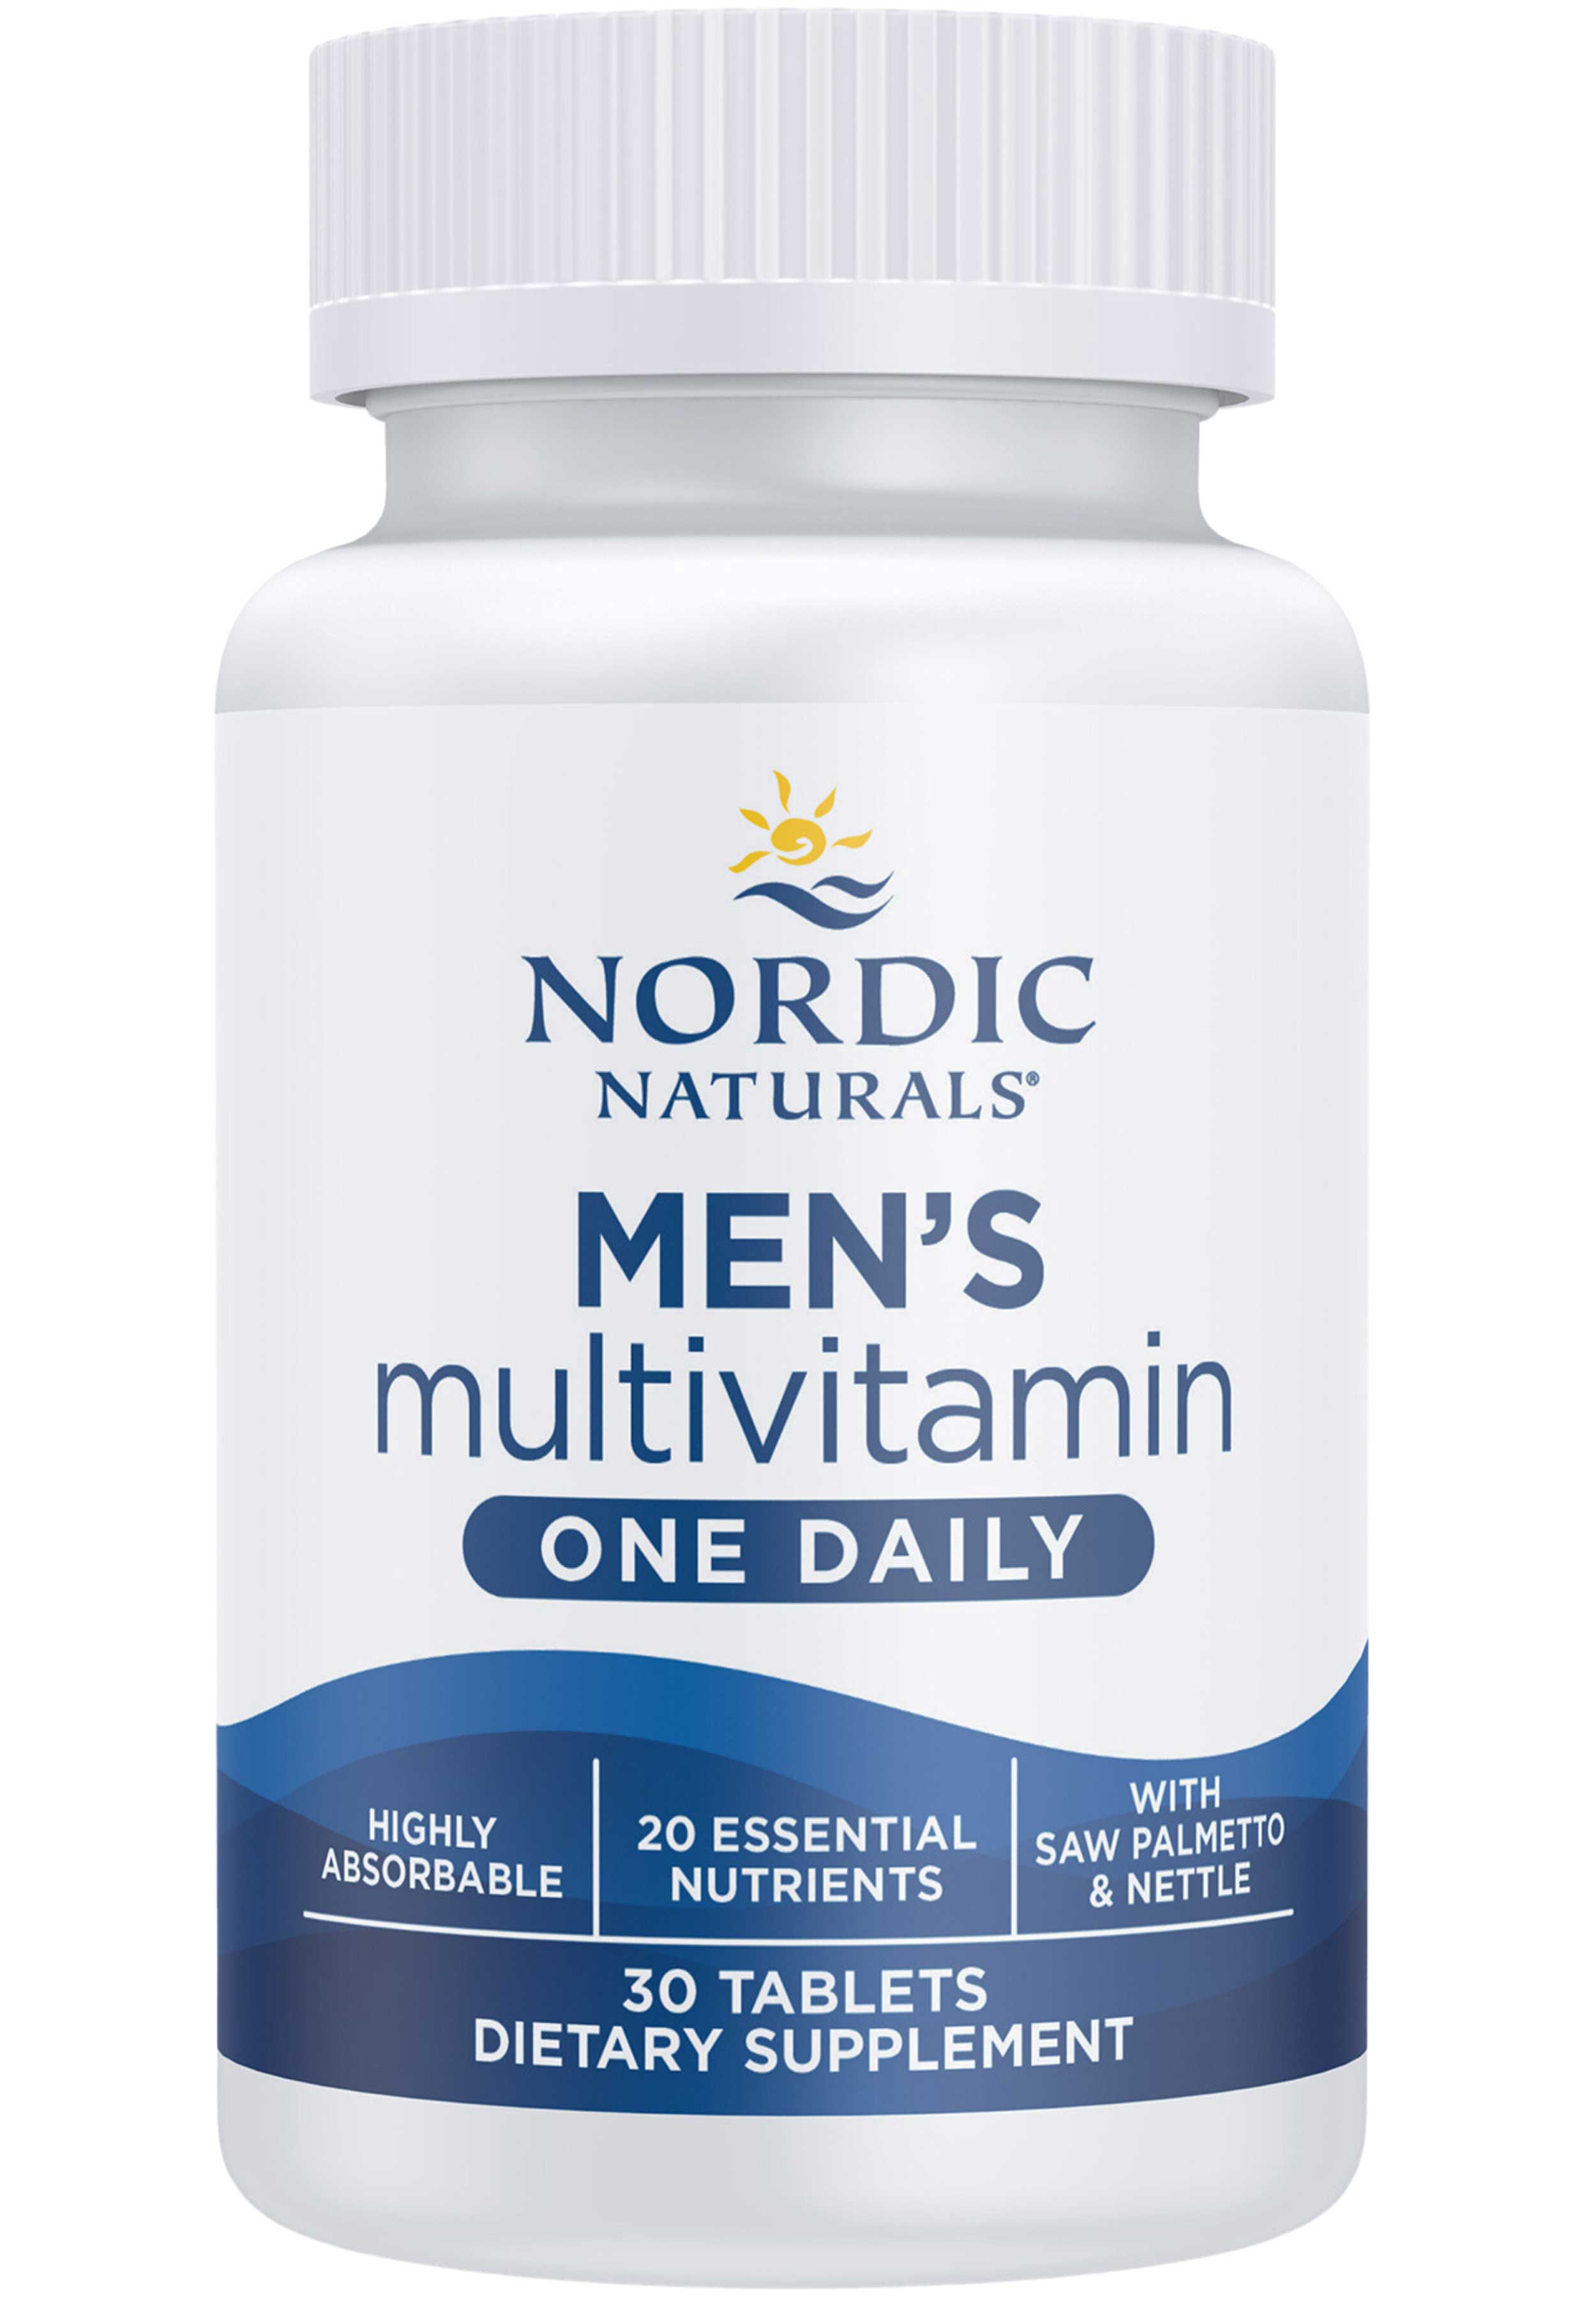 Nordic Naturals Men's Multivitamin One Daily